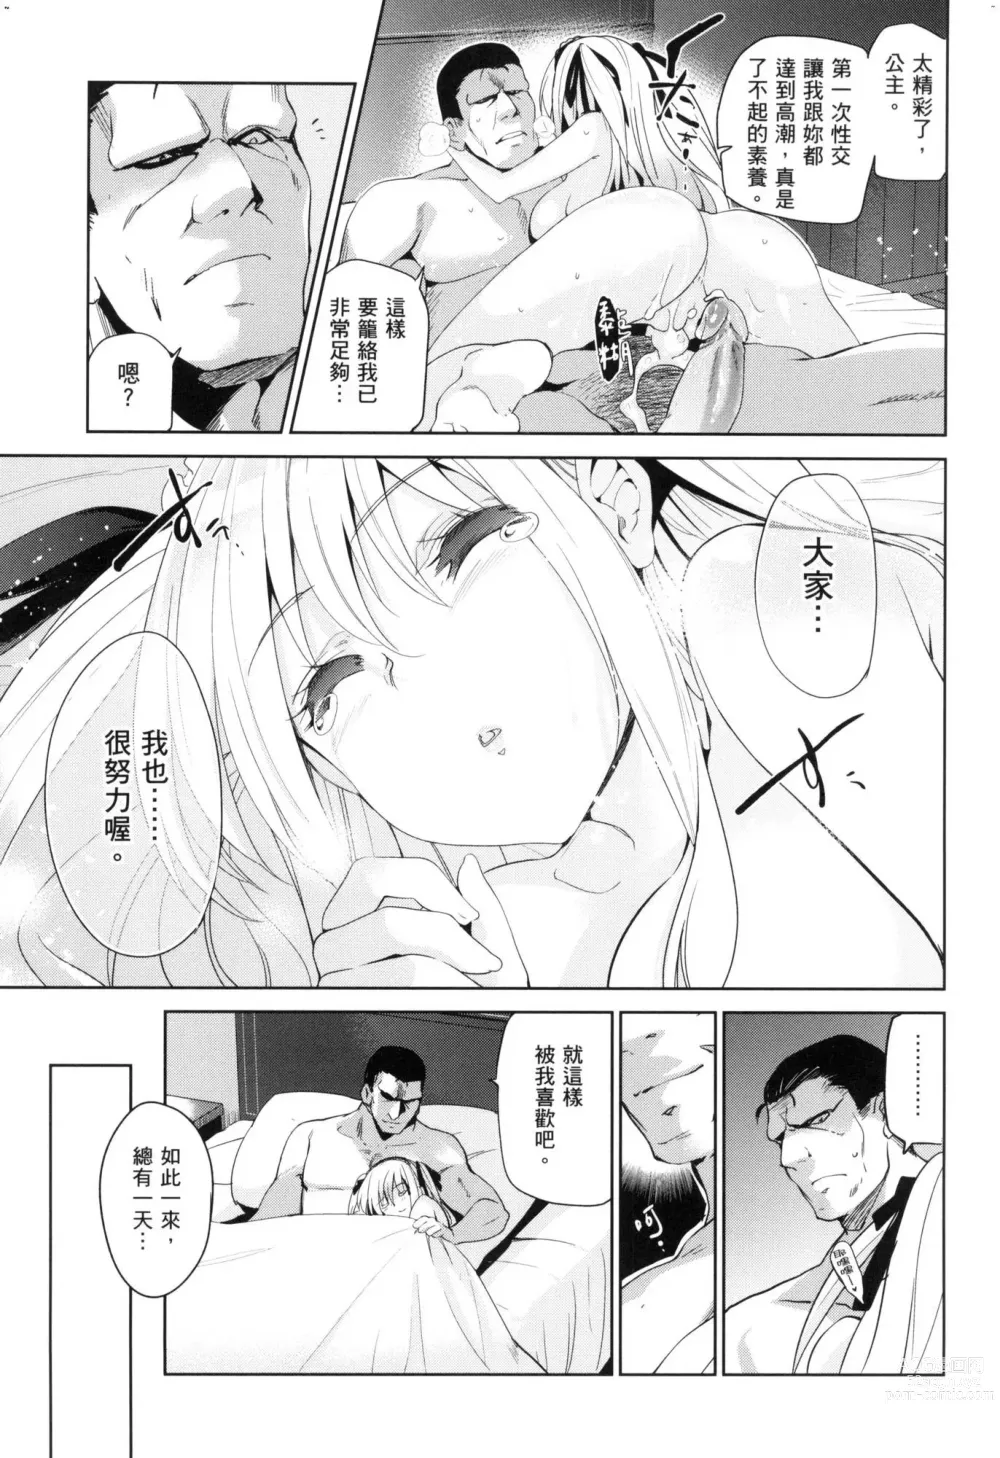 Page 213 of manga 蹂躪公主 (decensored)